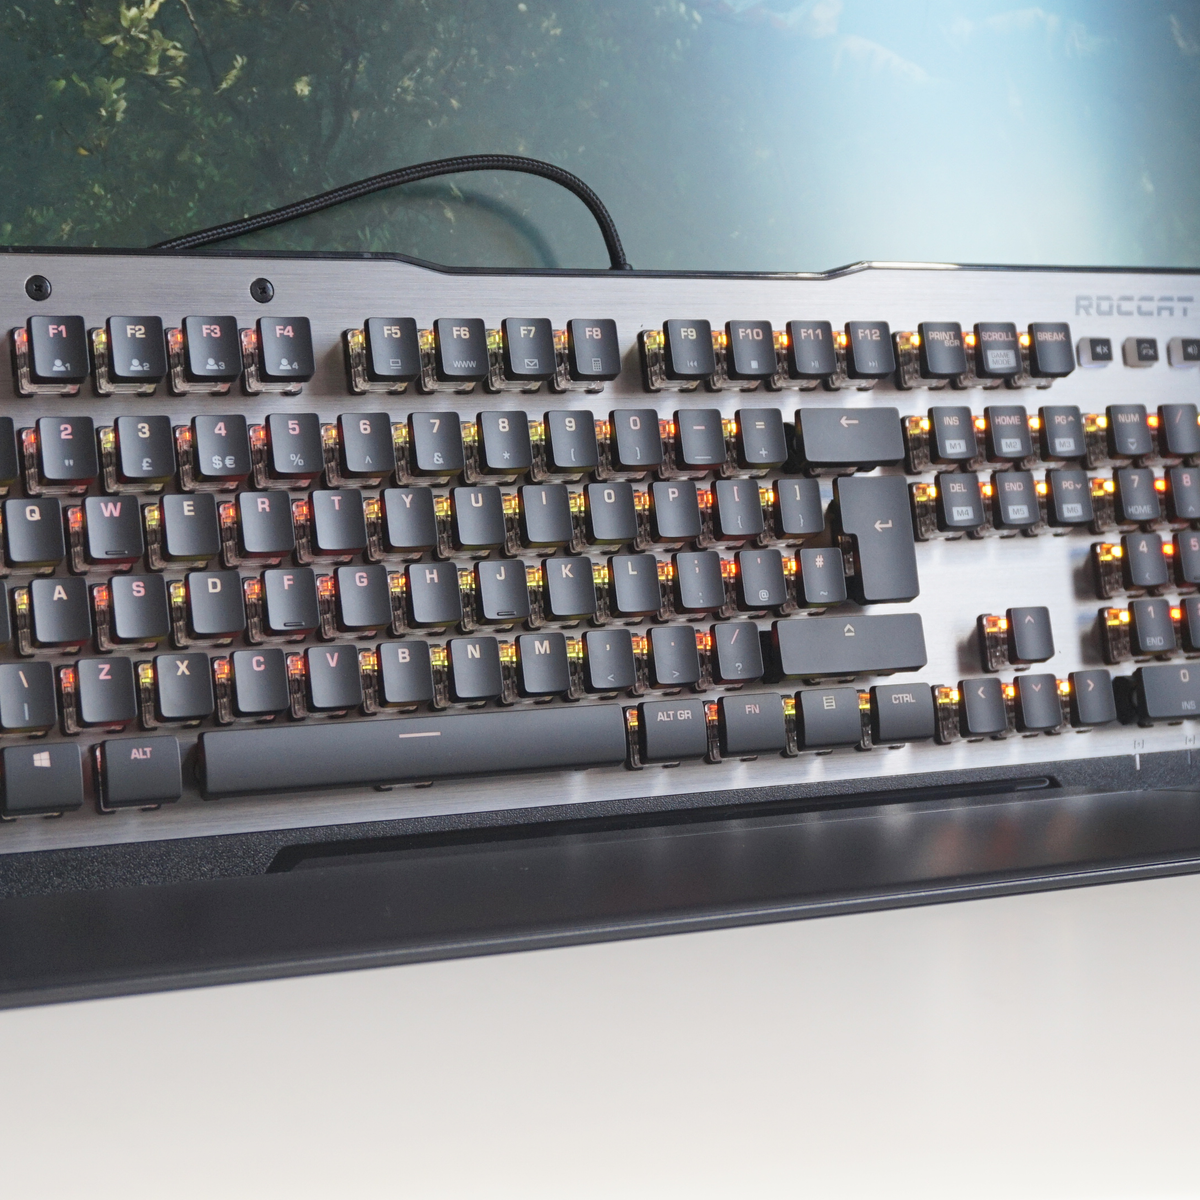 Roccat Vulcan 120 review: A superb mechanical gaming keyboard